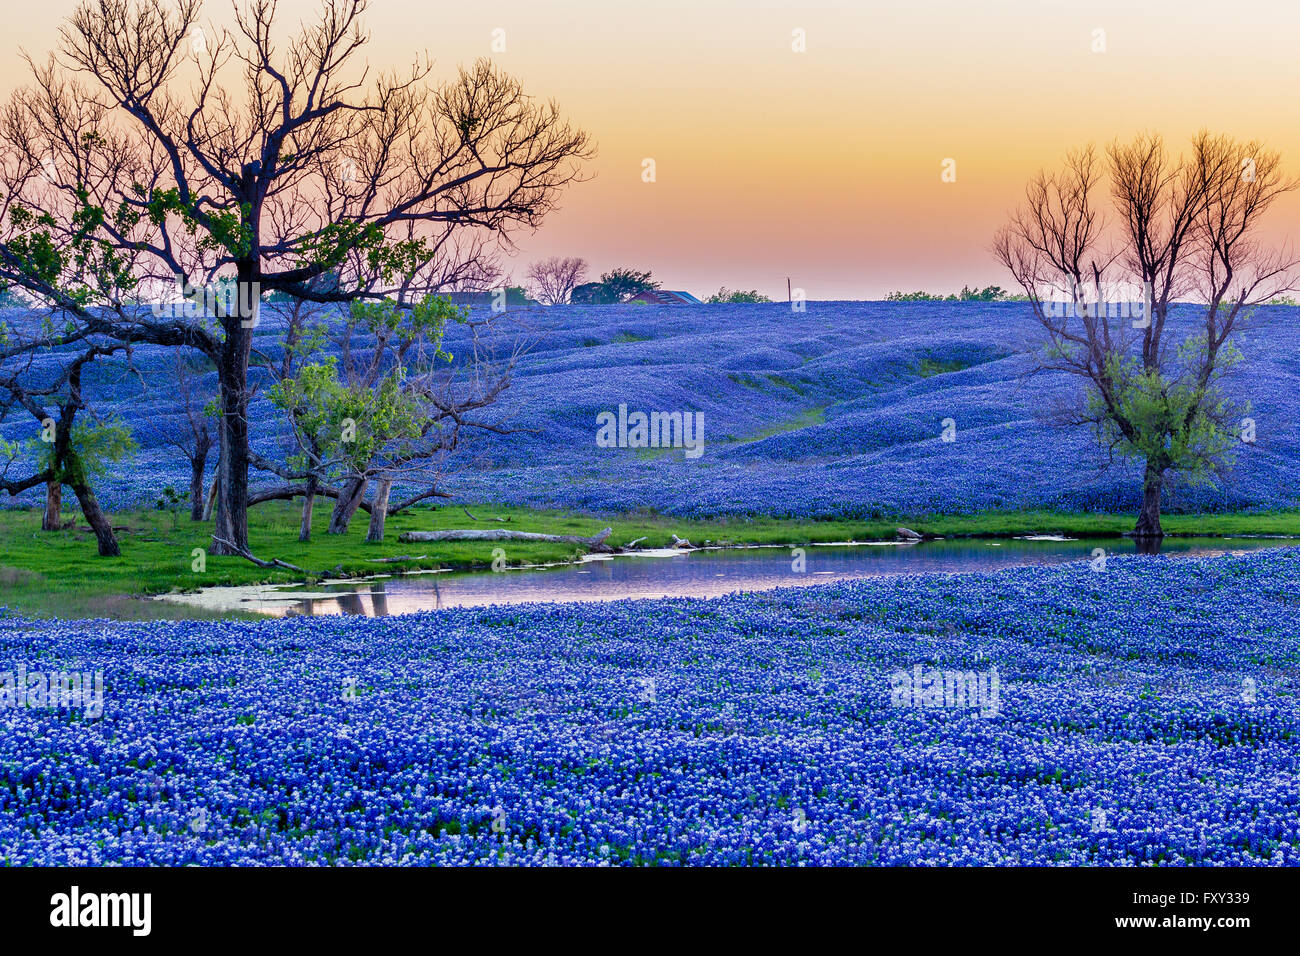 Weiten Feld der Kornblume Blumen, Texas Staat Blume am Wegesrand Bluebonnet in Ennis / Texas. Stockfoto